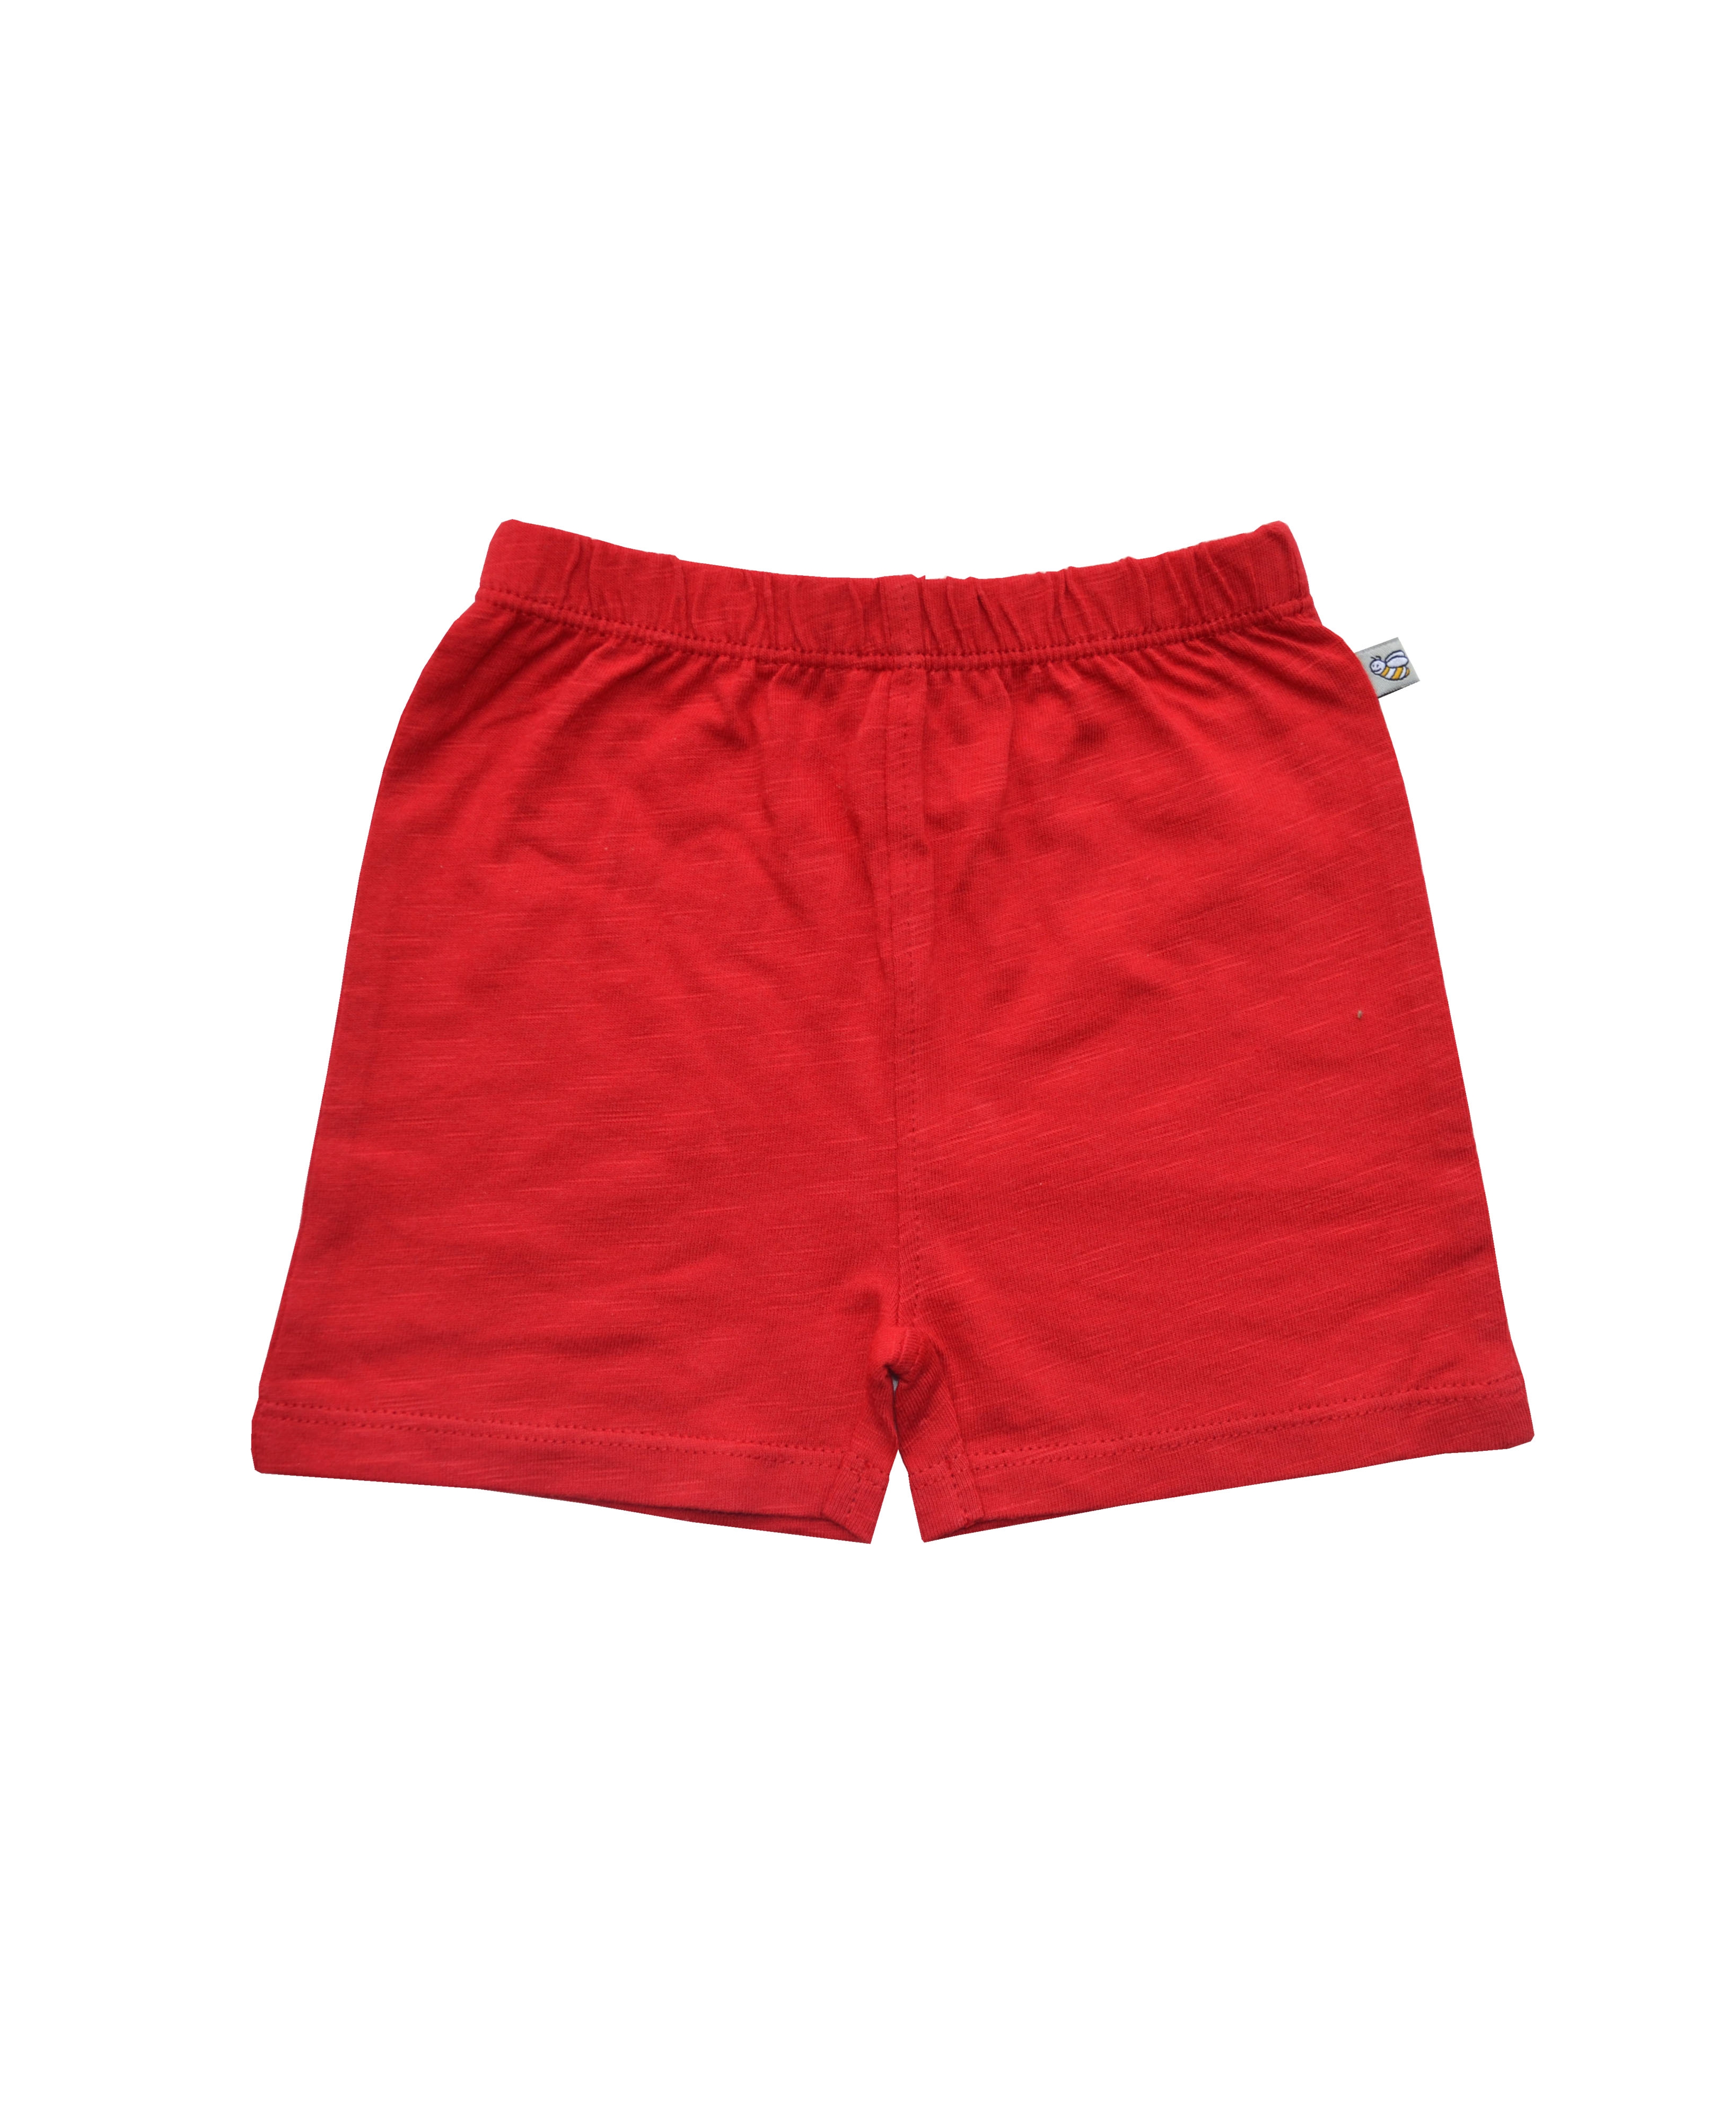 Babeez | Red Boys Shorts (100% Cotton Slub Jersey) undefined